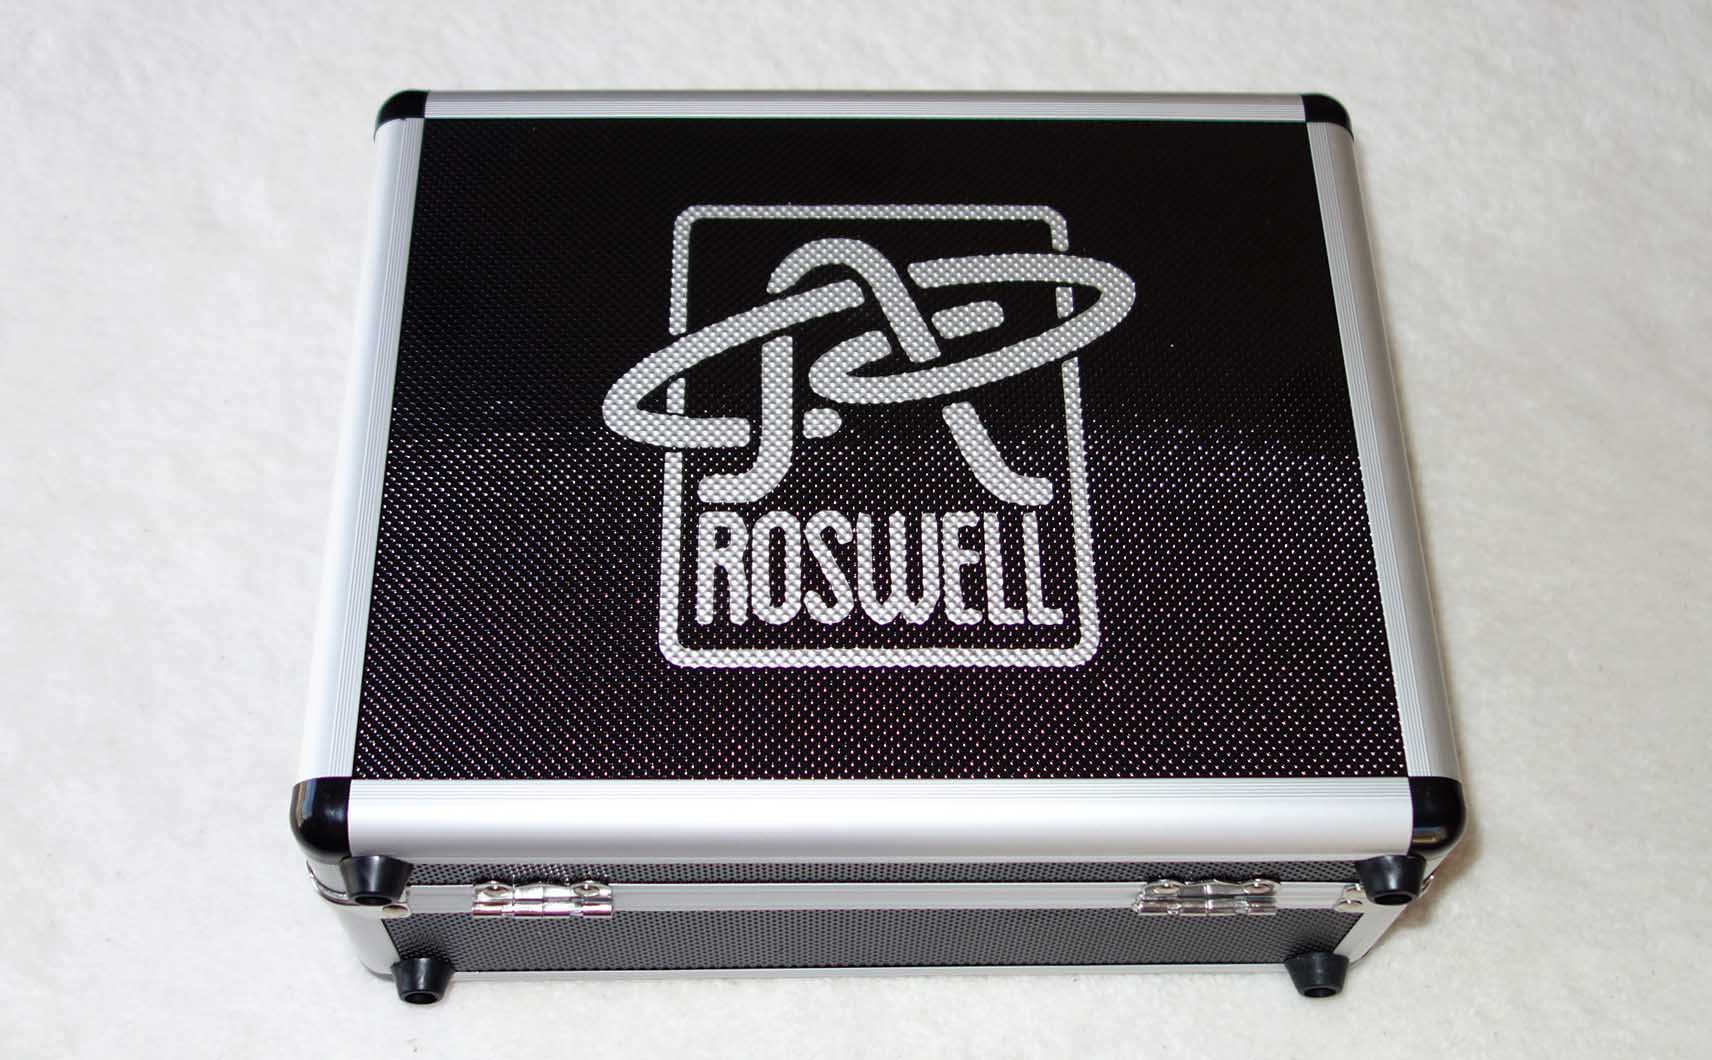 Roswell Pro Audio DELPHOS Condenser Vocal Mic, w/Flight Case, Shock Mount